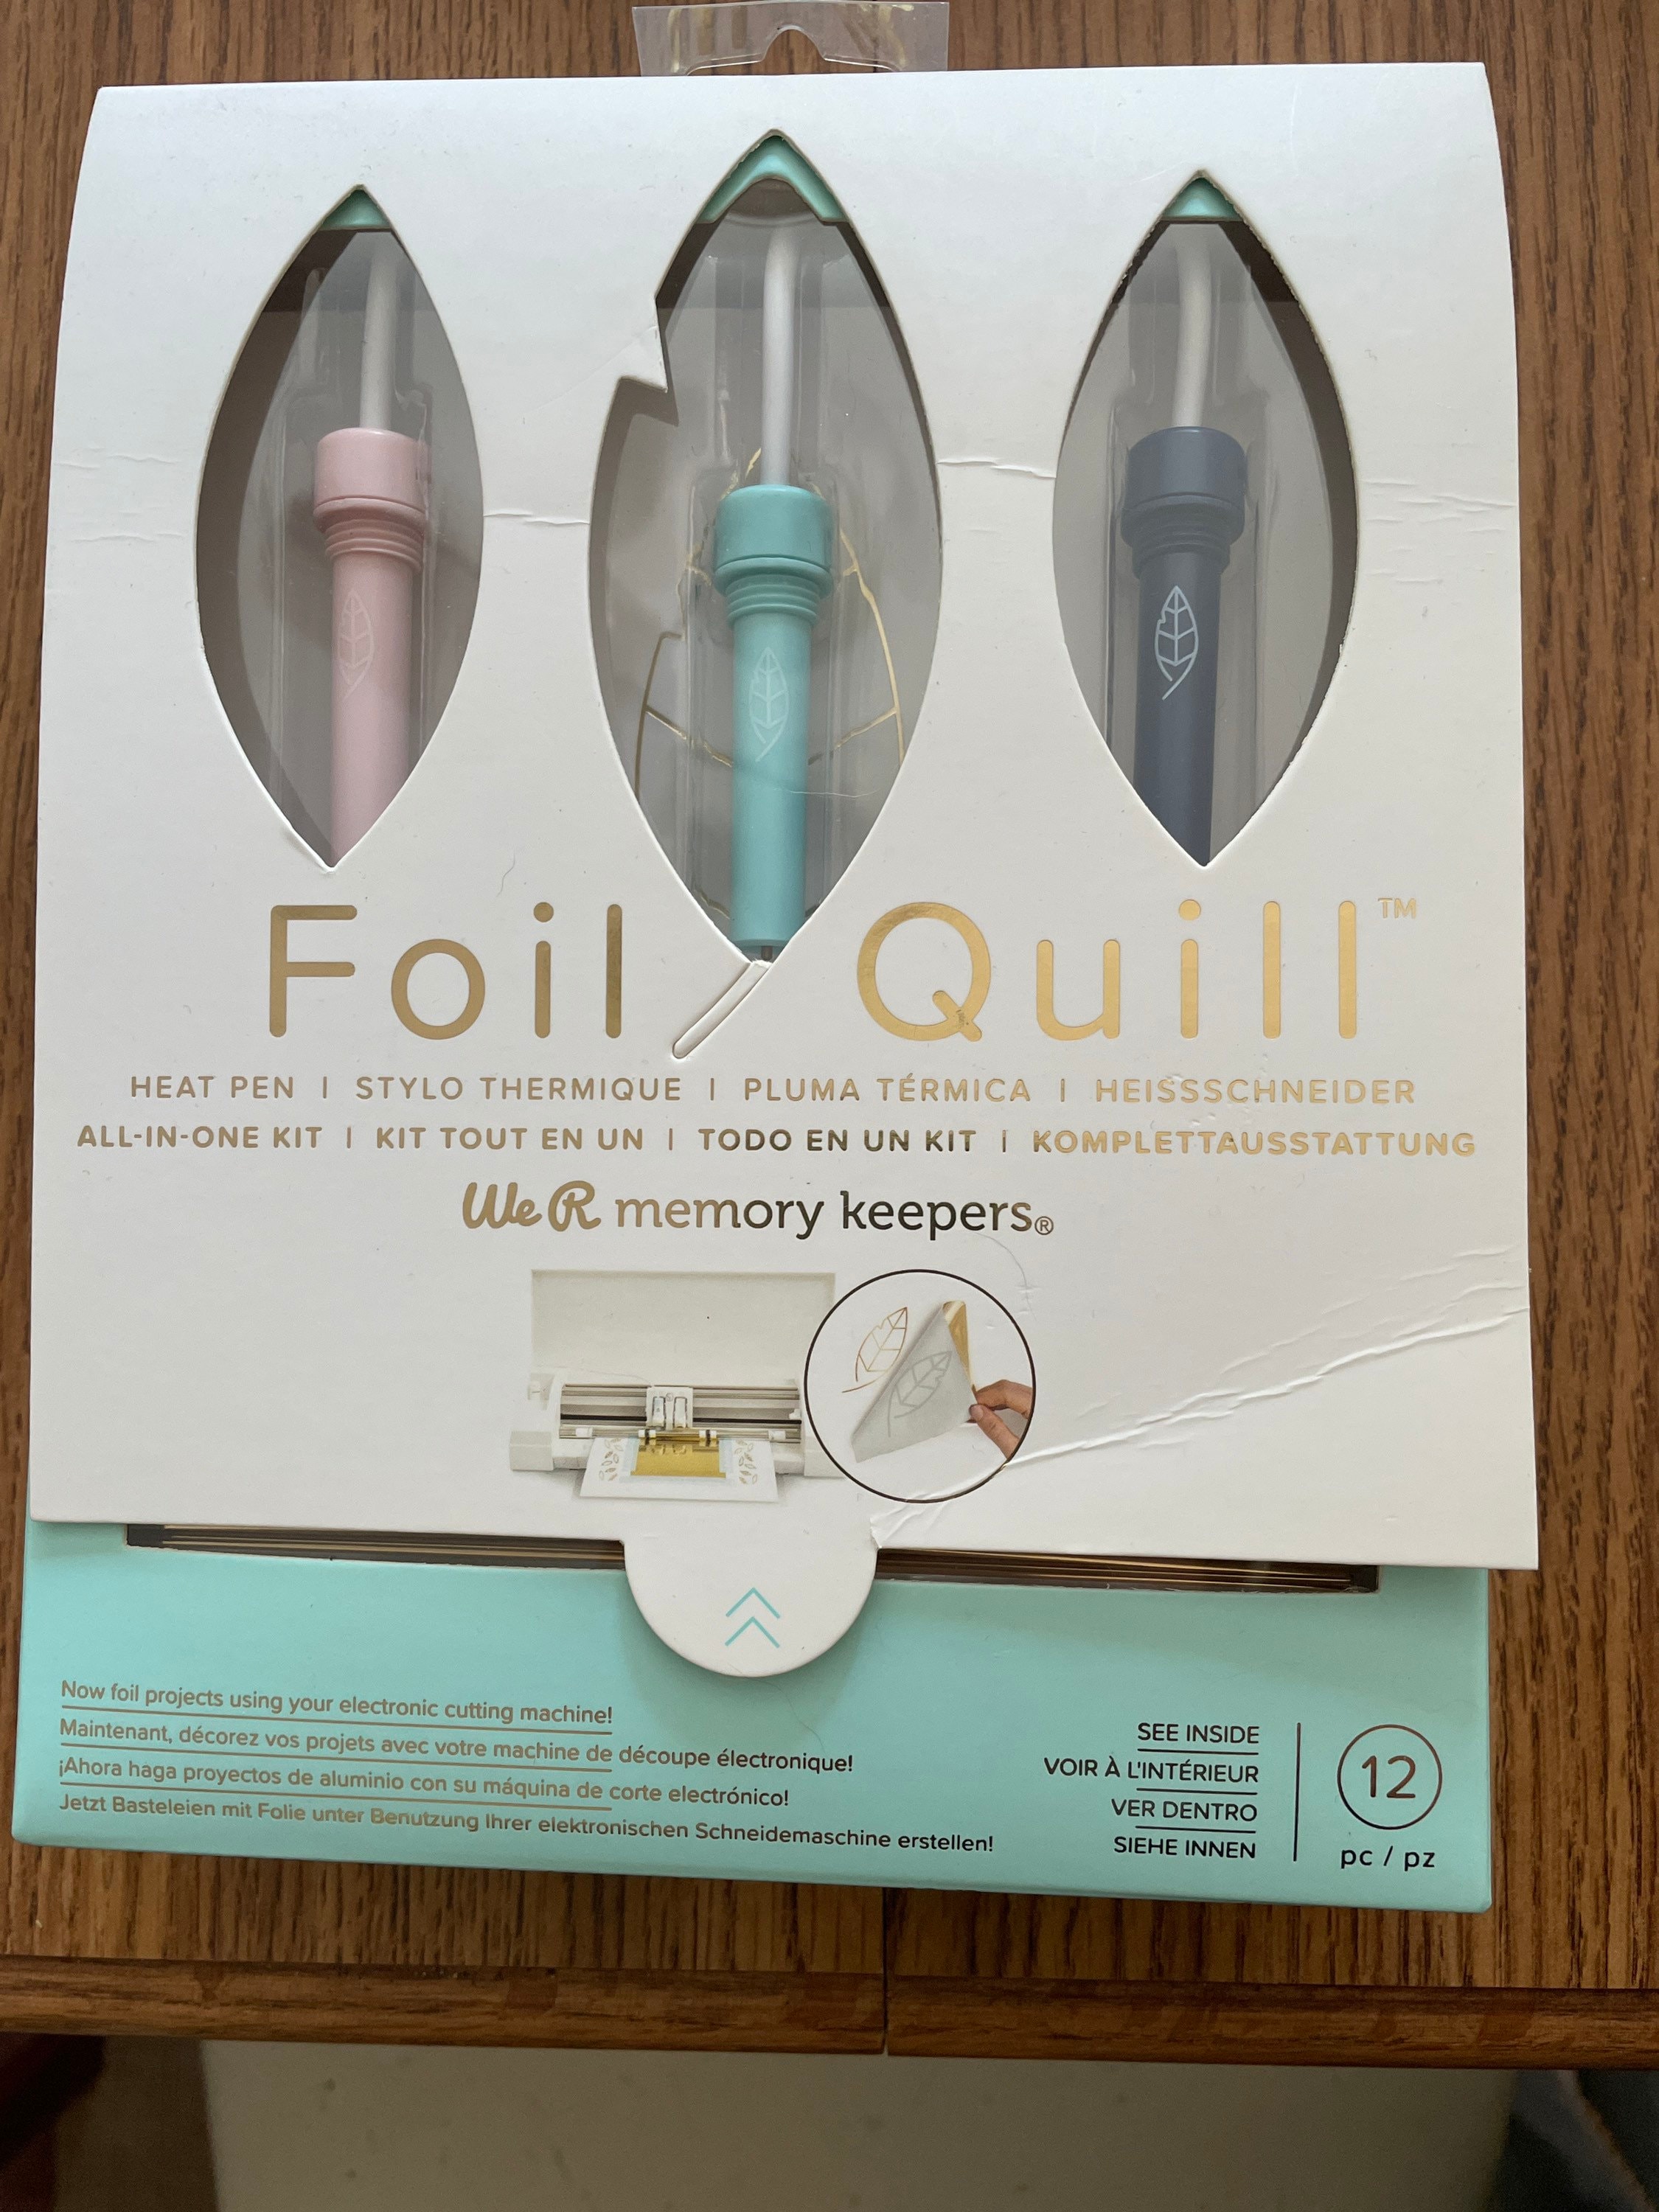 Foil Quill Freestyle Pen